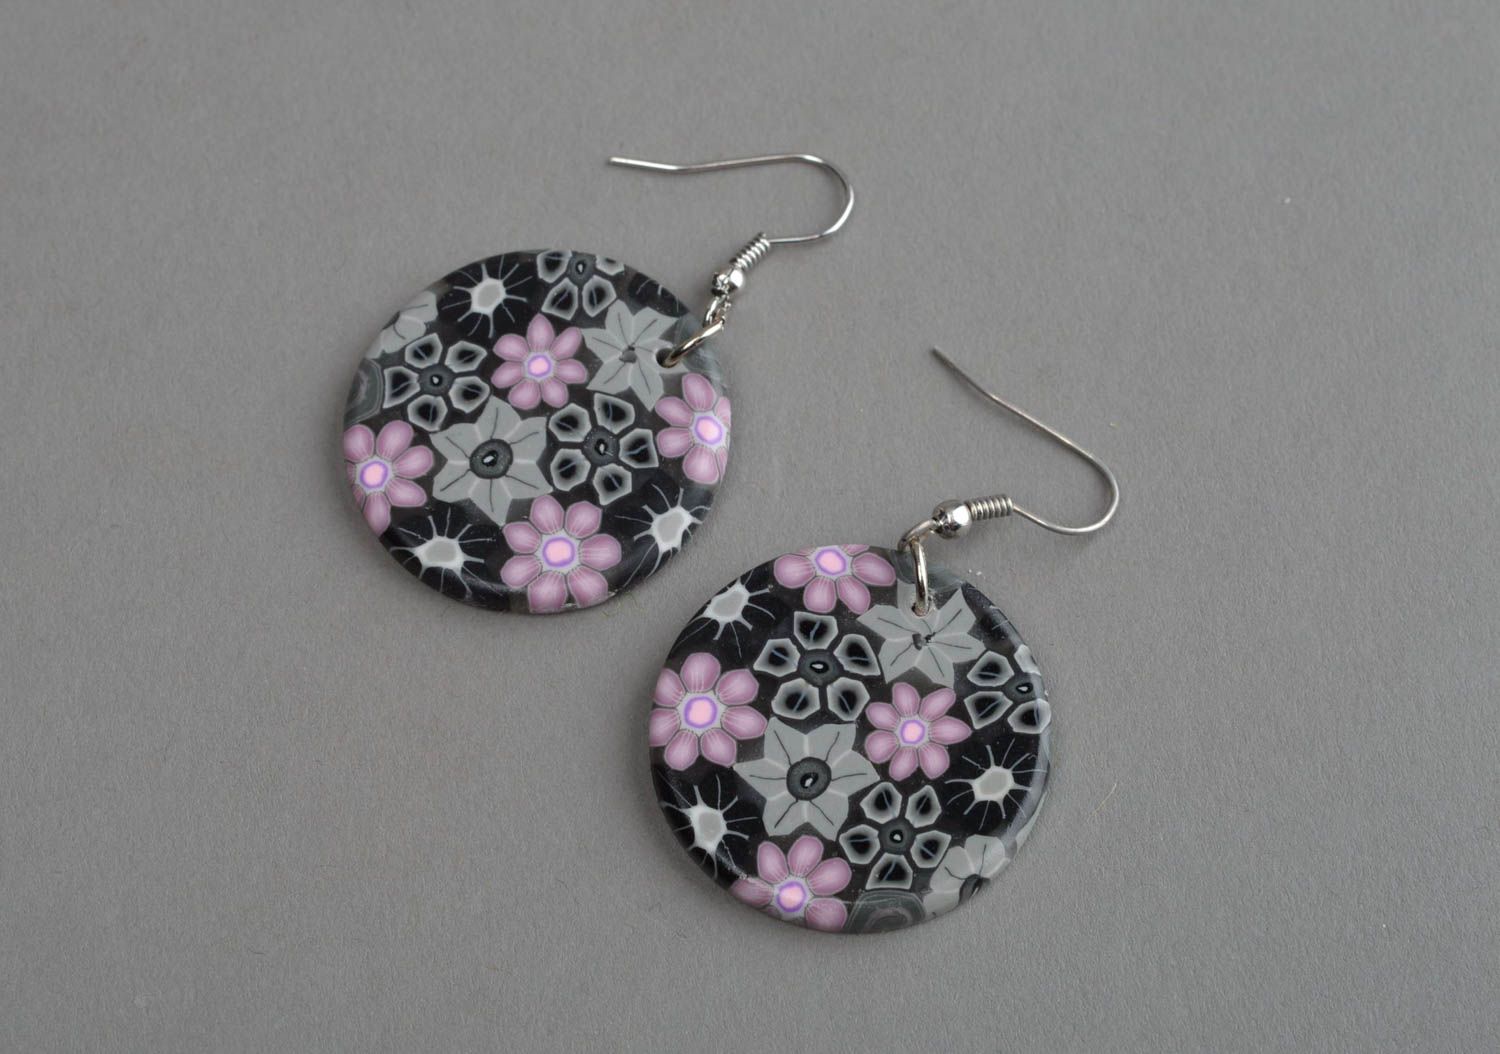 Handmade polymer clay earrings earrings with charms soutache earrings for women photo 2